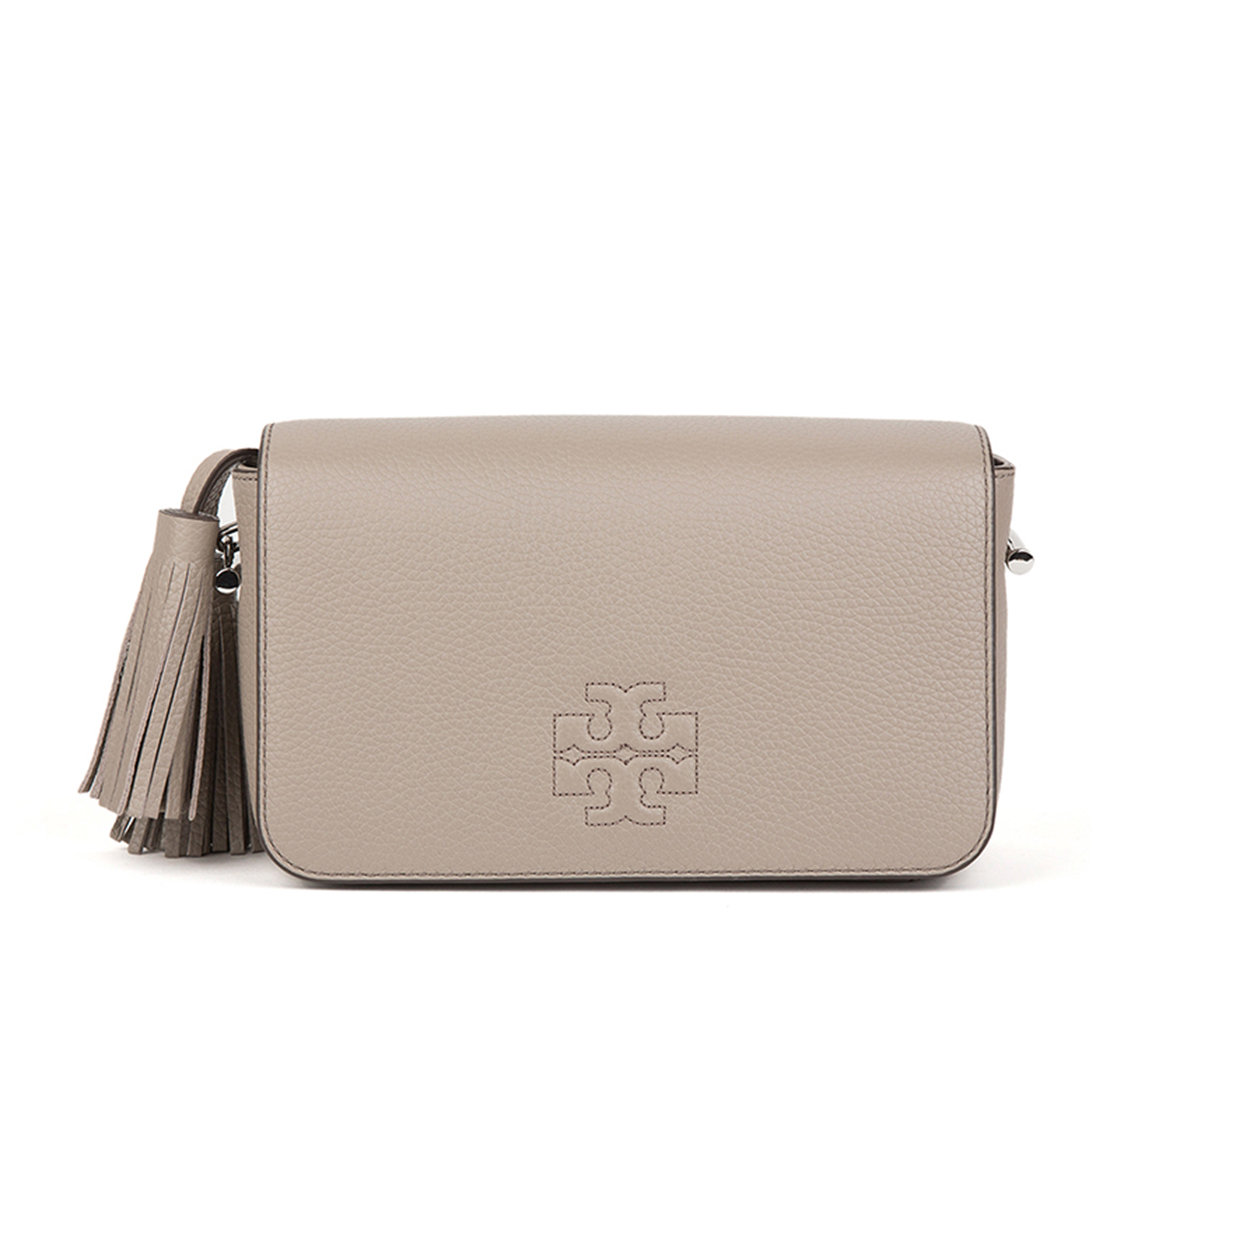 Thea Mini Bag beige - Tory Burch - Purchase on Ventis.